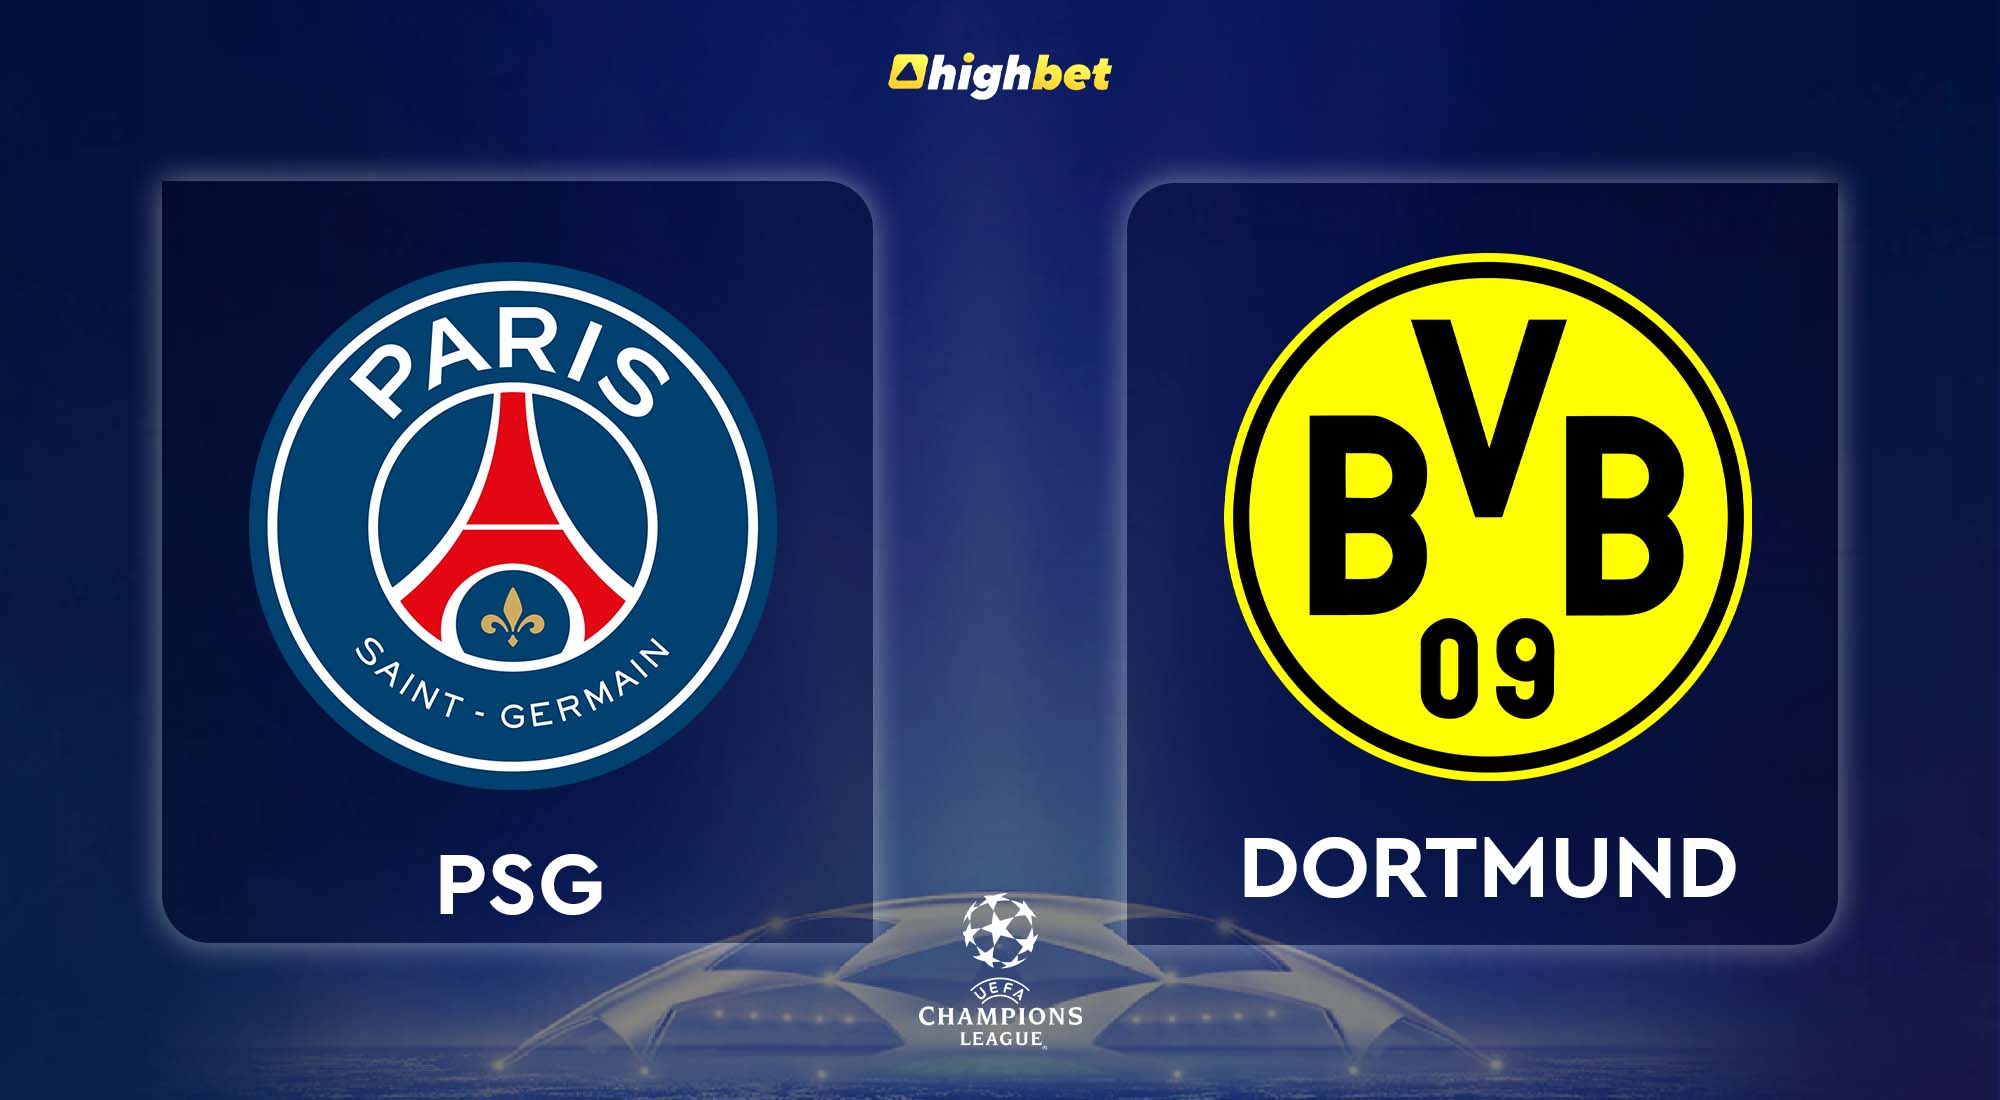 PSG vs Dortmund - highbet UEFA Champions League Pre-Match Analysis